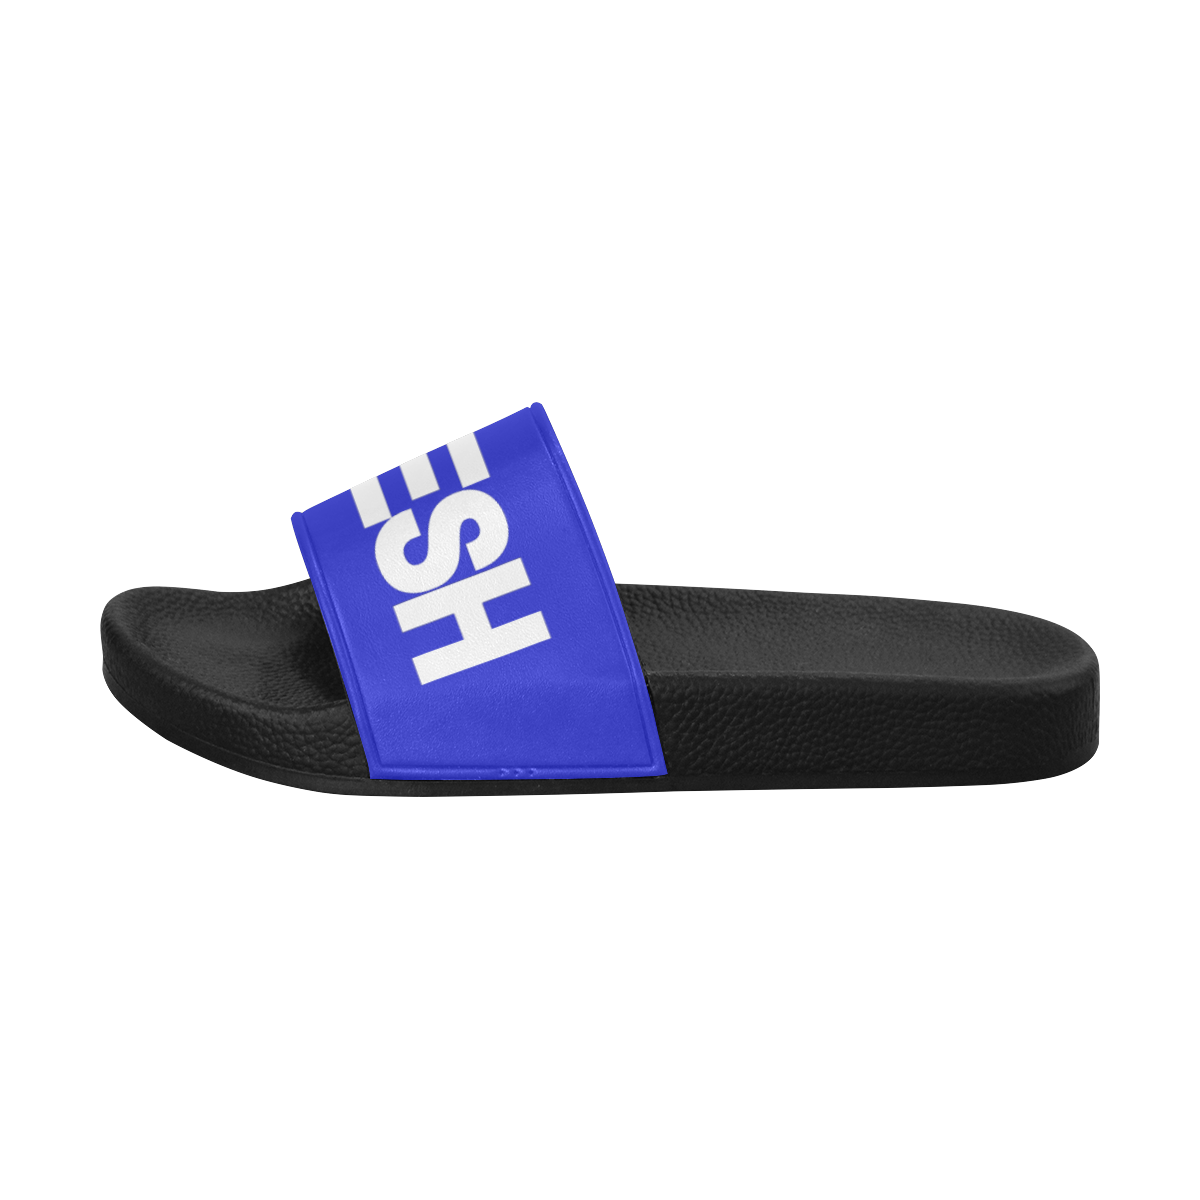 Father Fresh Slides Blue Women's Slide Sandals (Model 057)